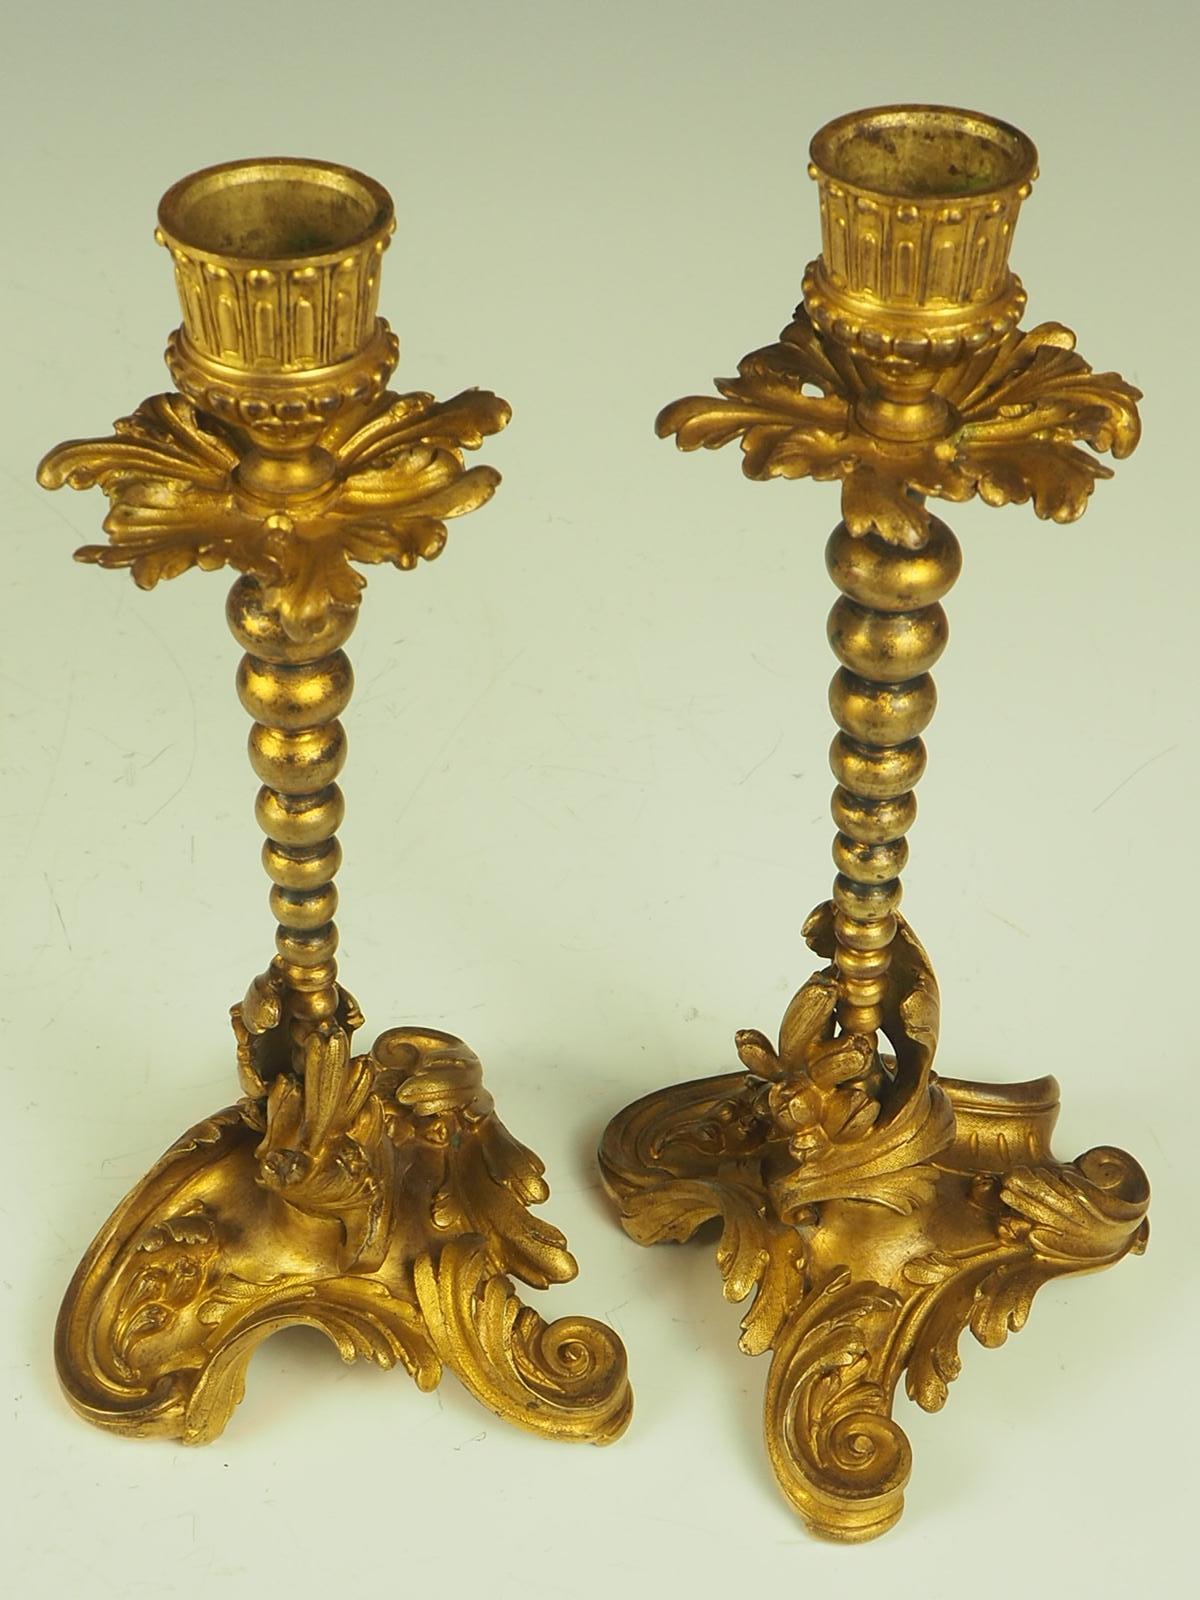 French Pair of Henri Picard Gilt Bronze Candlesticks, circa 1850